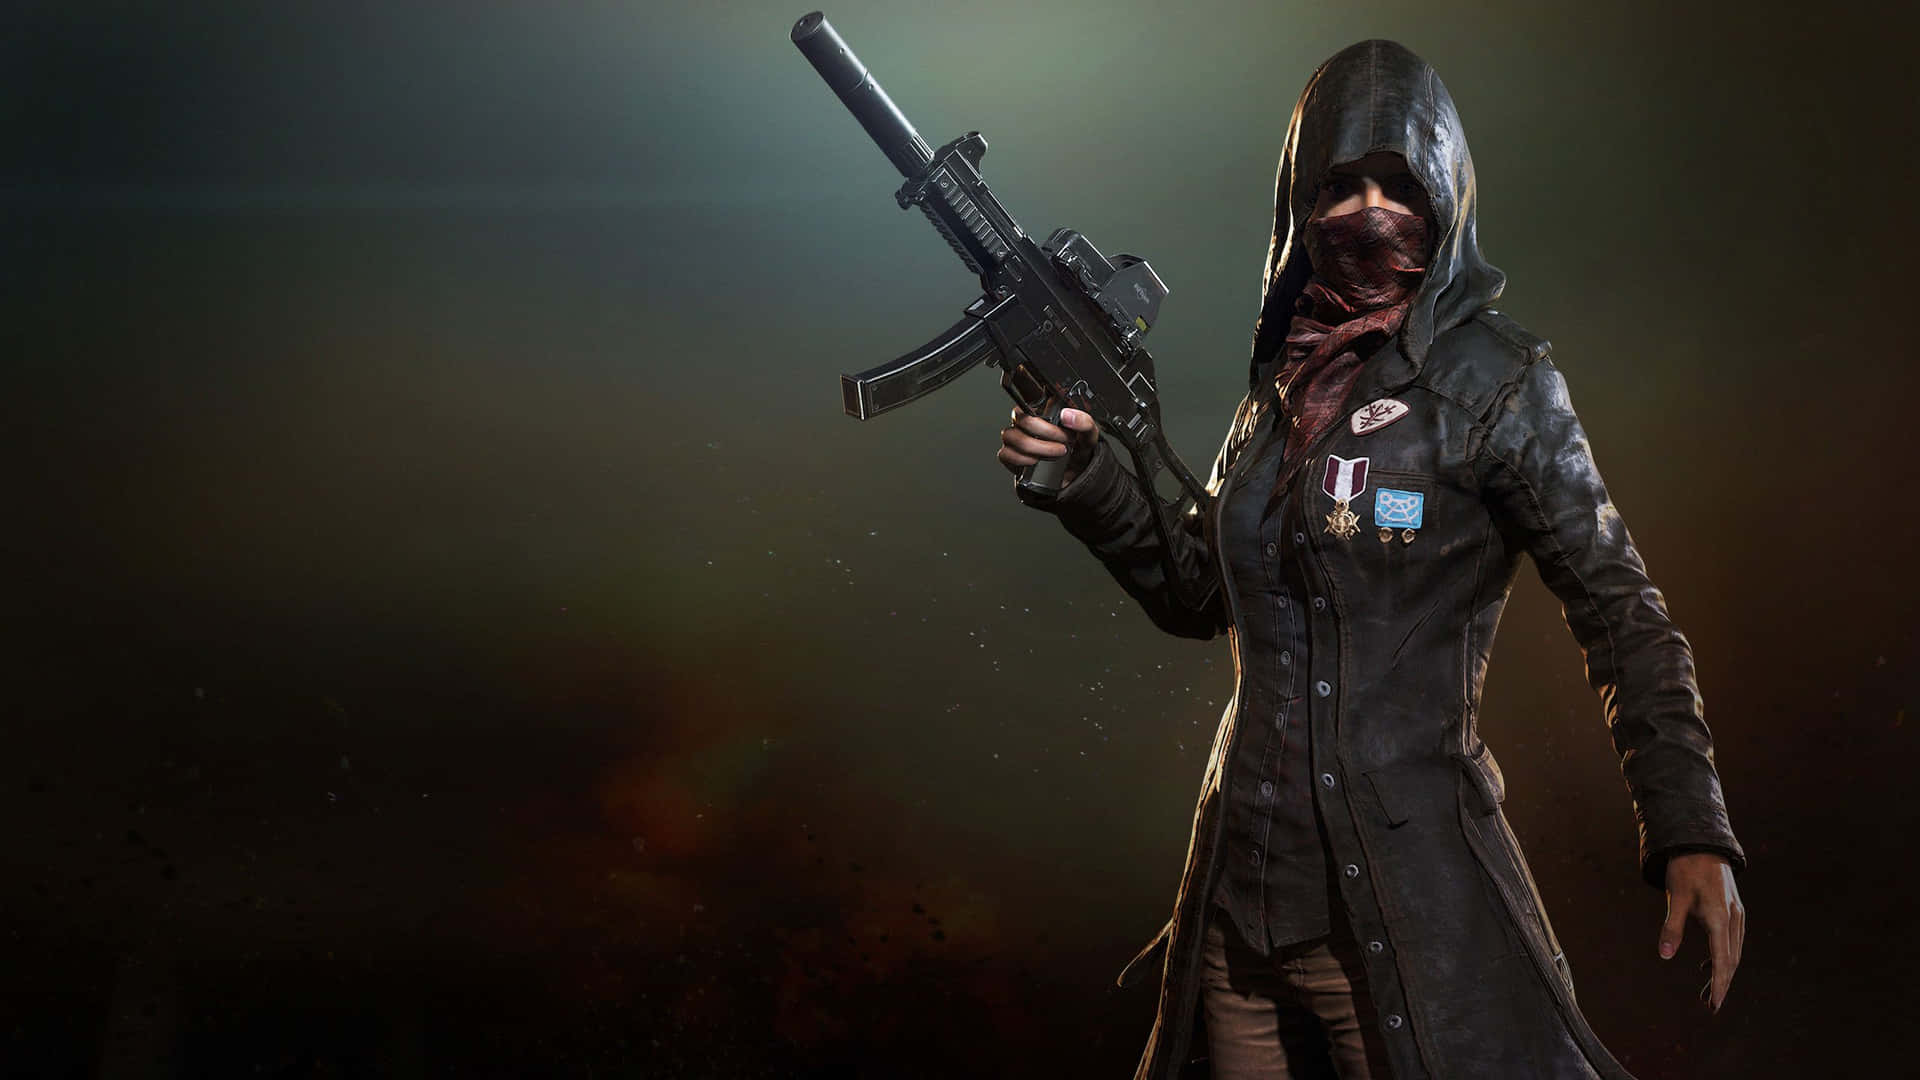 Player Unknown Battlegrounds Hooded Girl With Gun Wallpaper